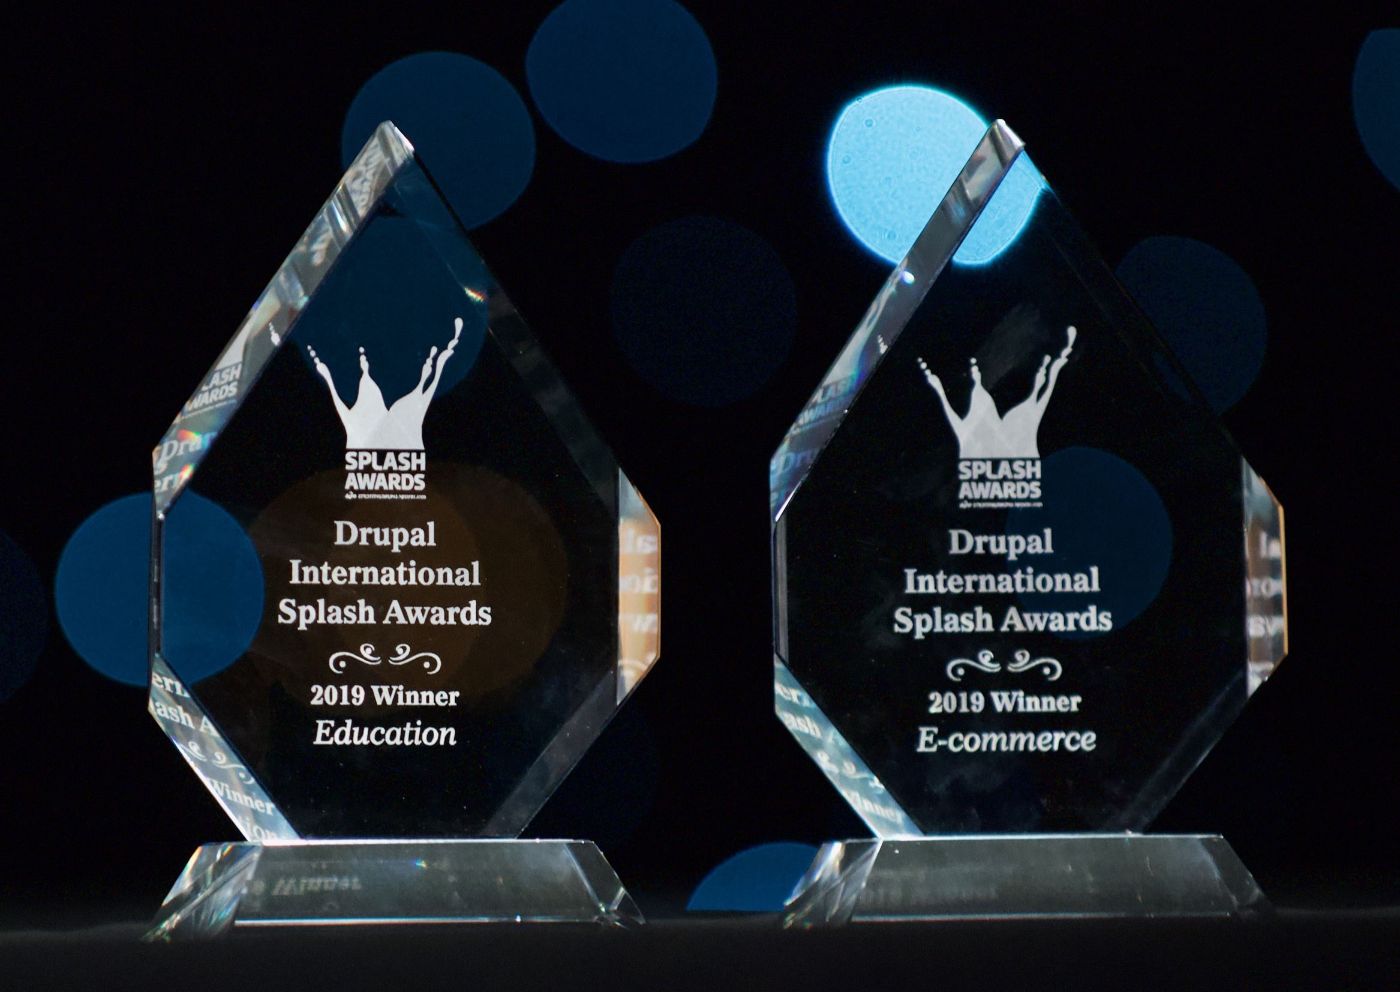 Opigno Drupal International Splash Awards for education, 2019